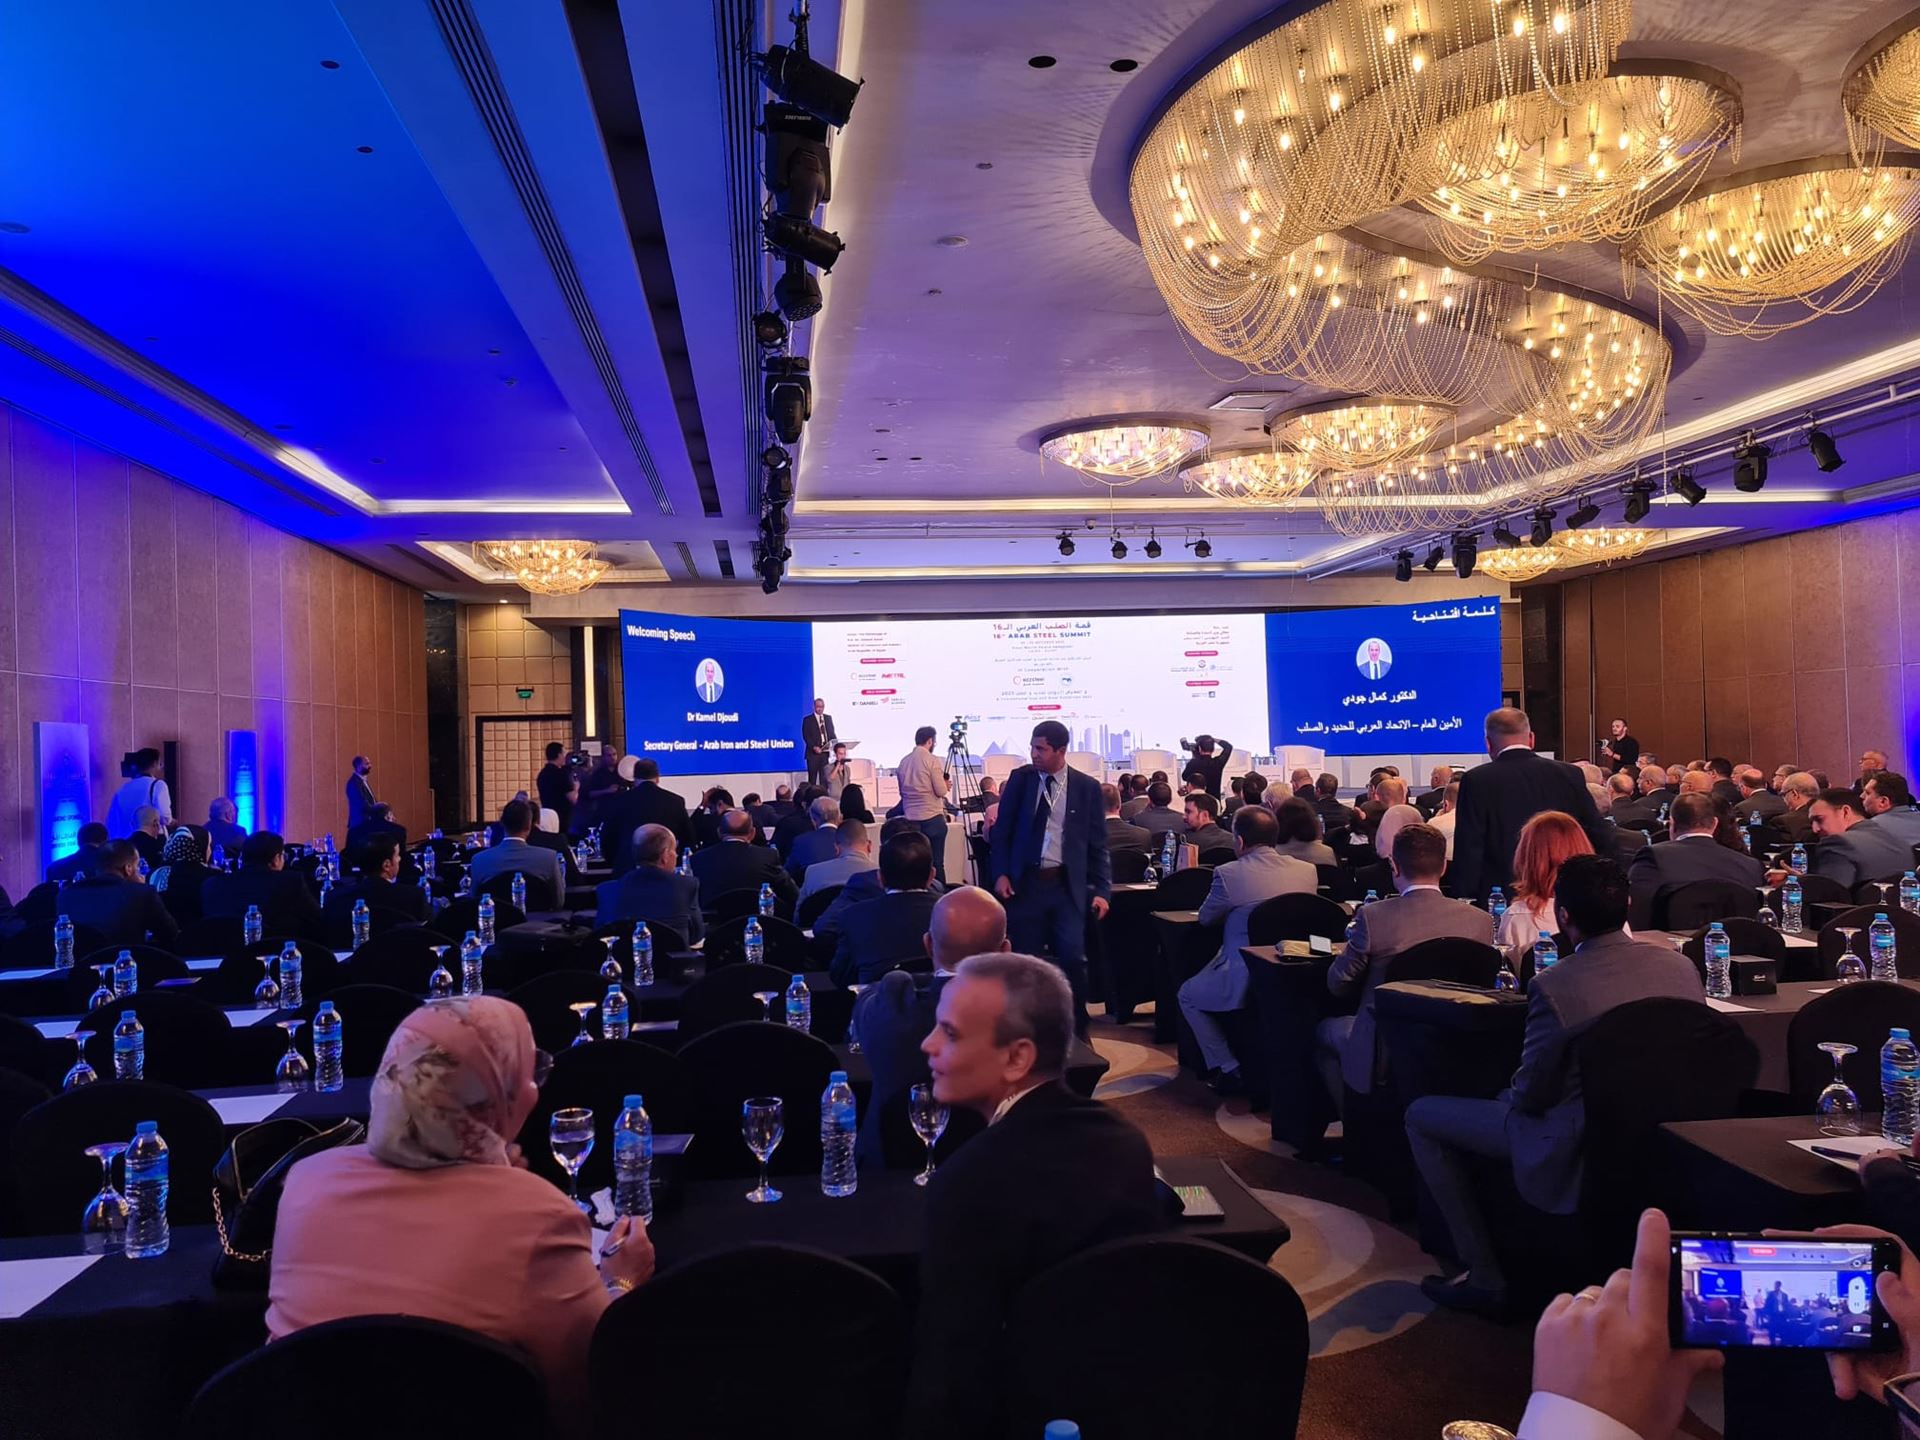 16th Arab Steel Summit opened its doors today!